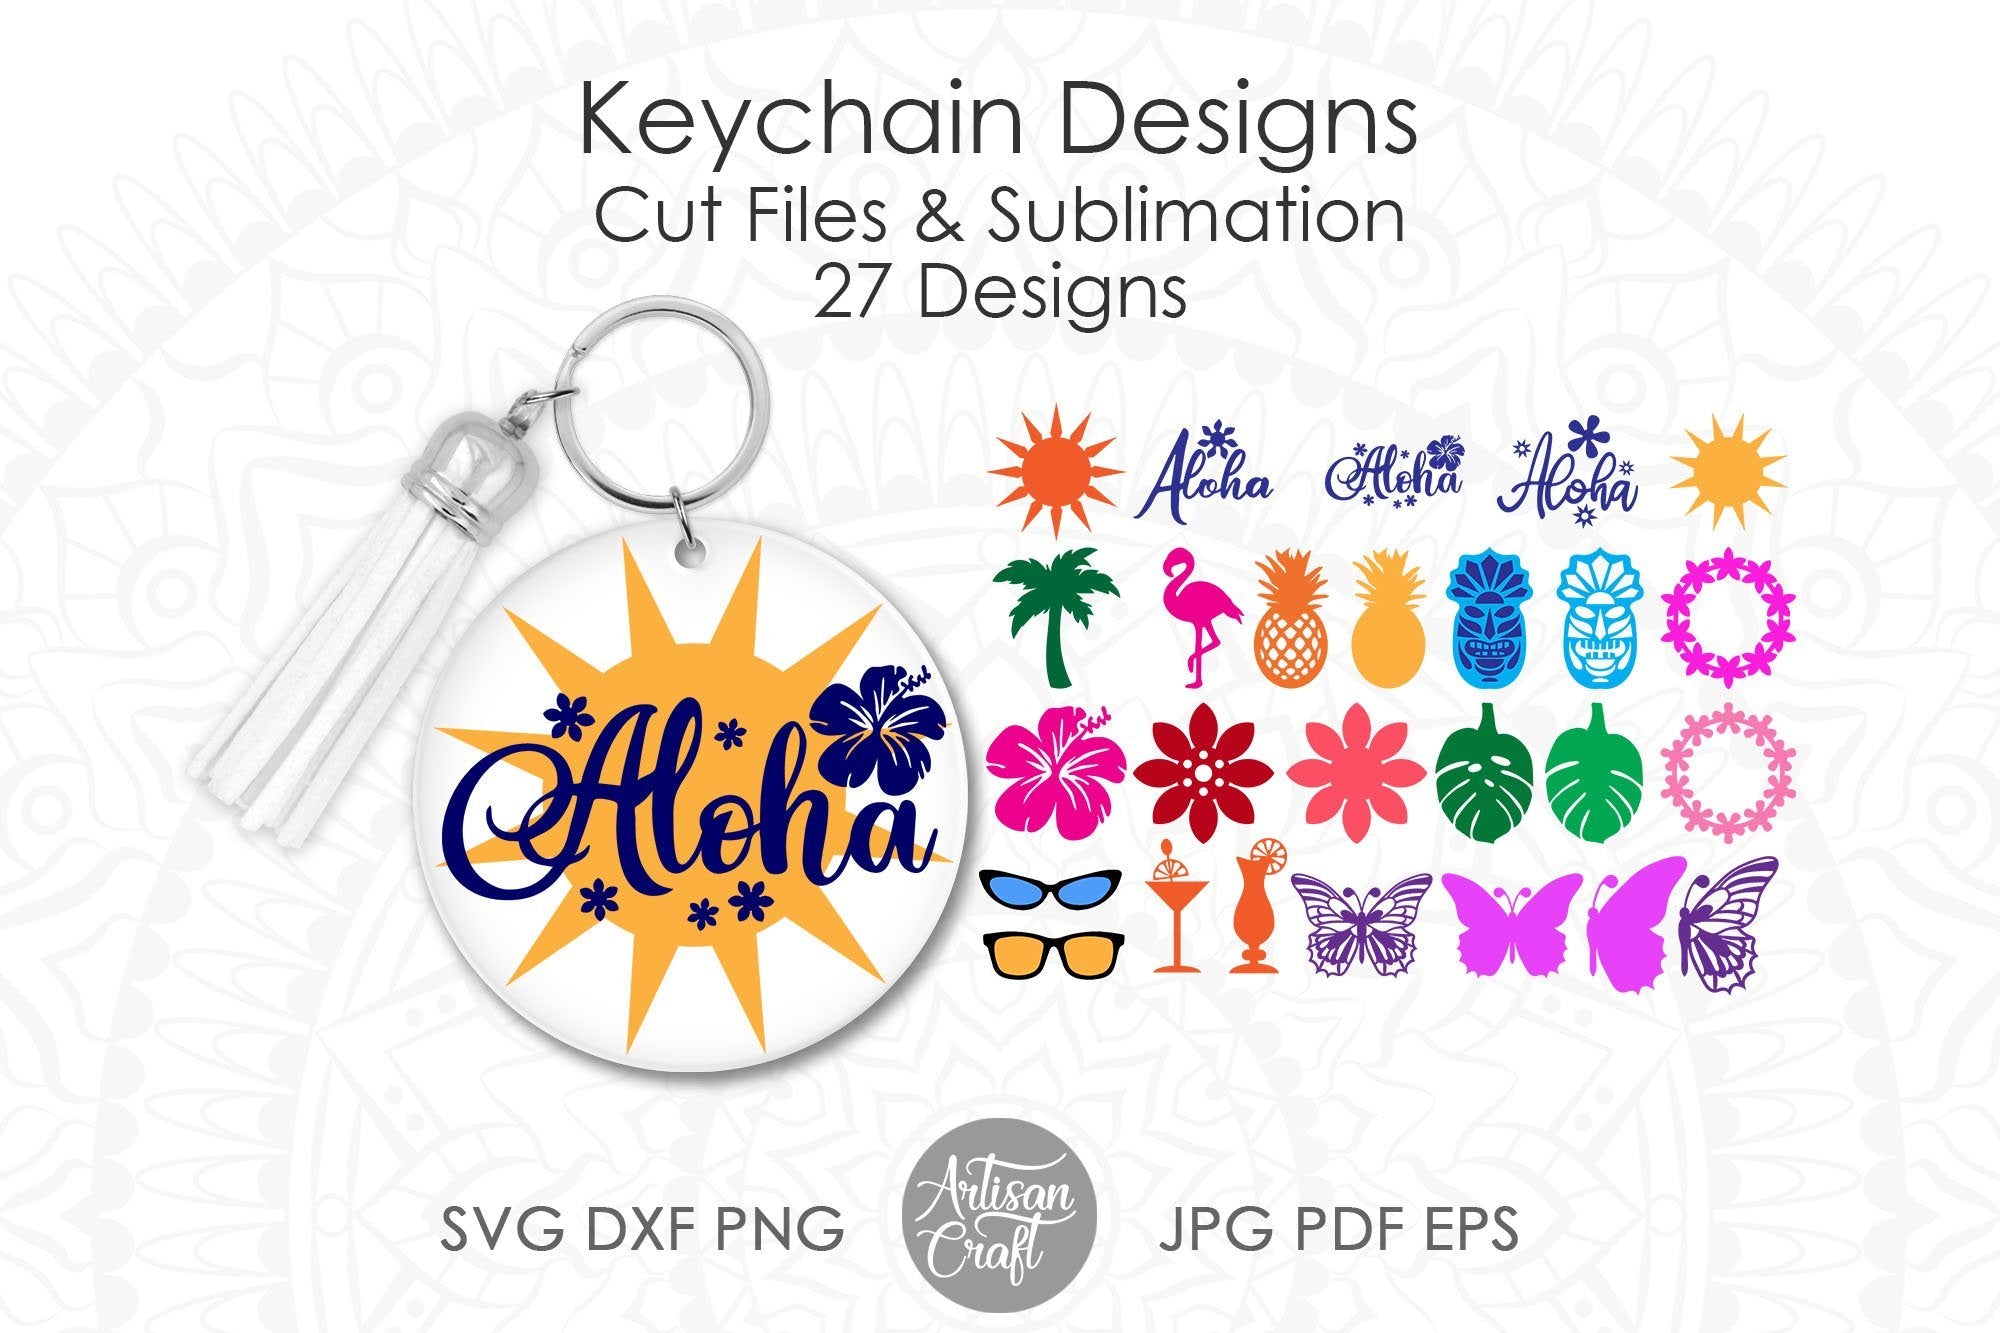 Keychain Display Card SVG Bundle - Set 2 - So Fontsy